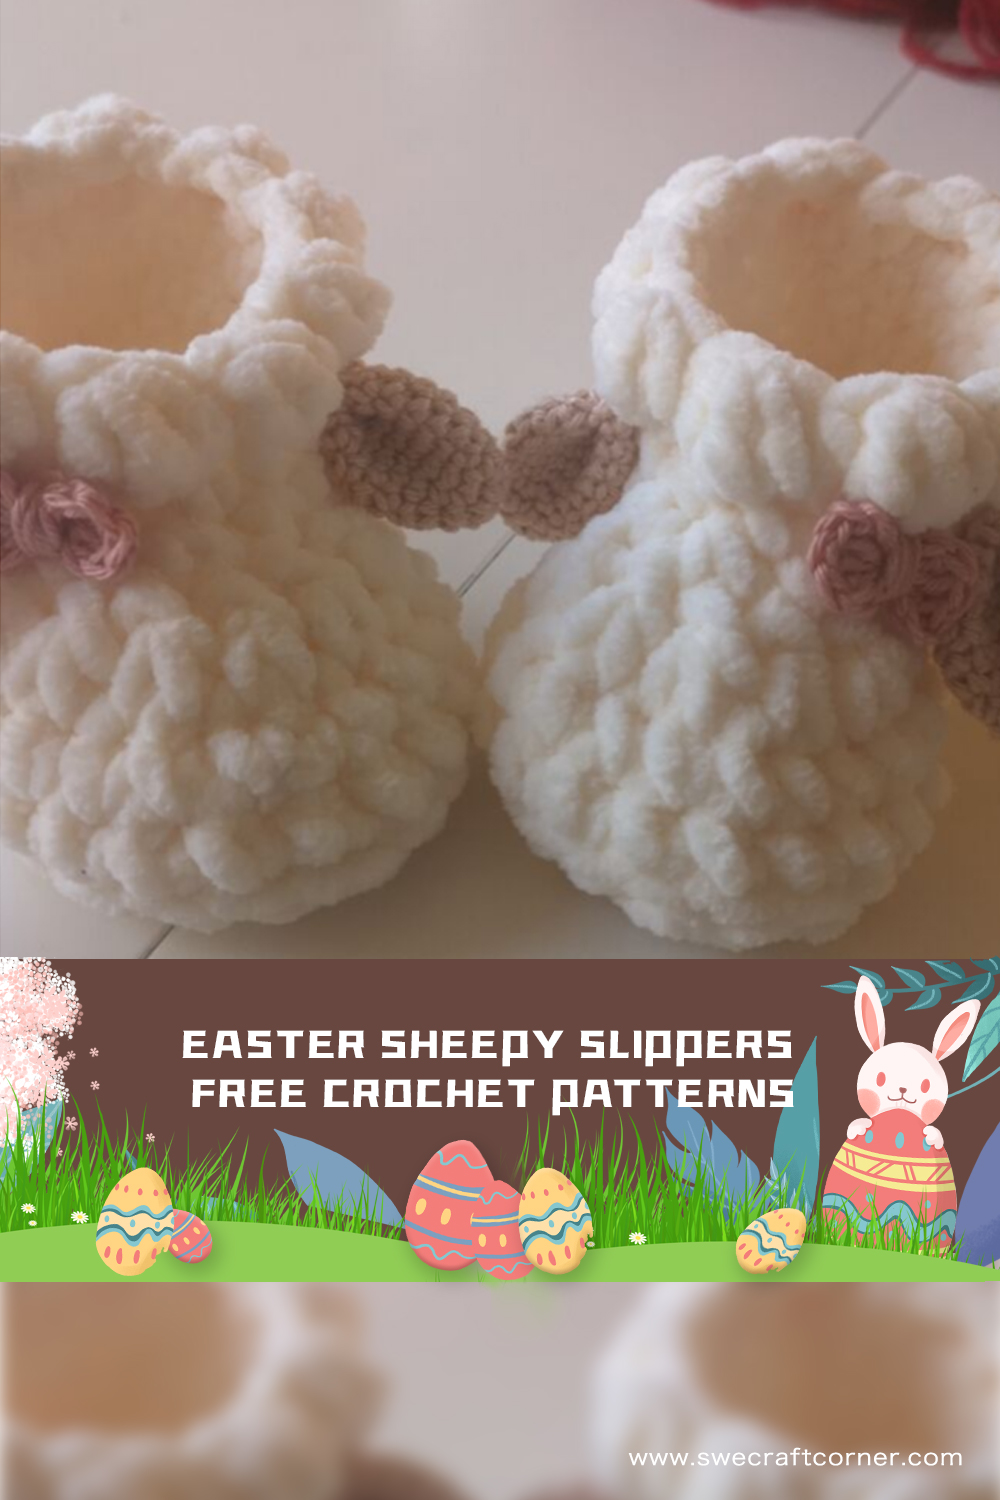 Easter Sheepy Slippers FREE Crochet Patterns